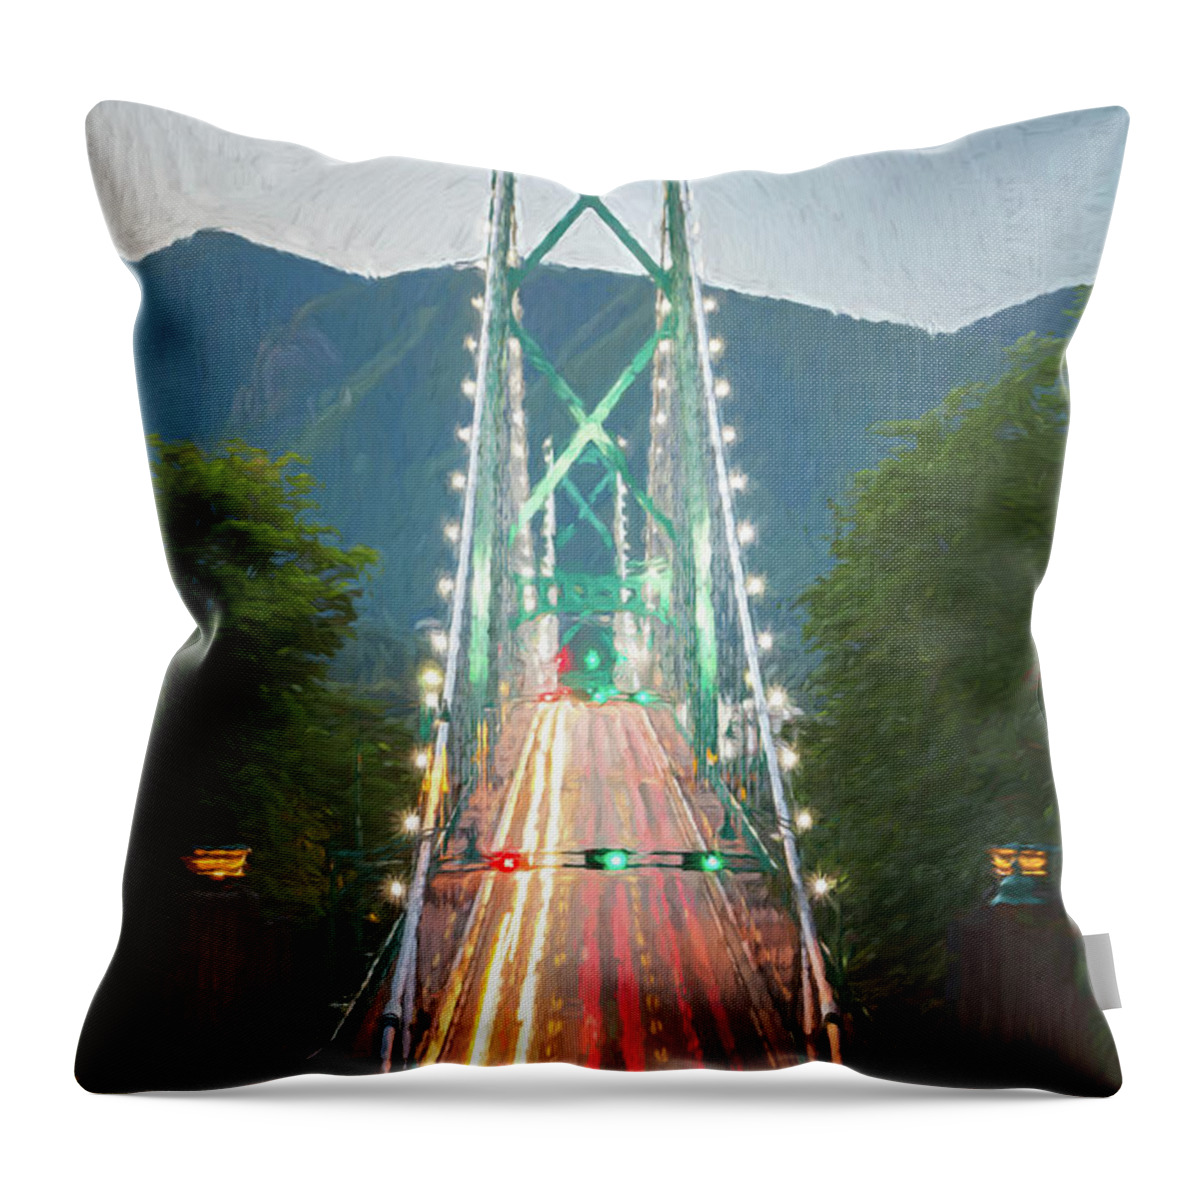 Canada Throw Pillow featuring the digital art Lions Gate Bridge Digital Painting by Rick Deacon